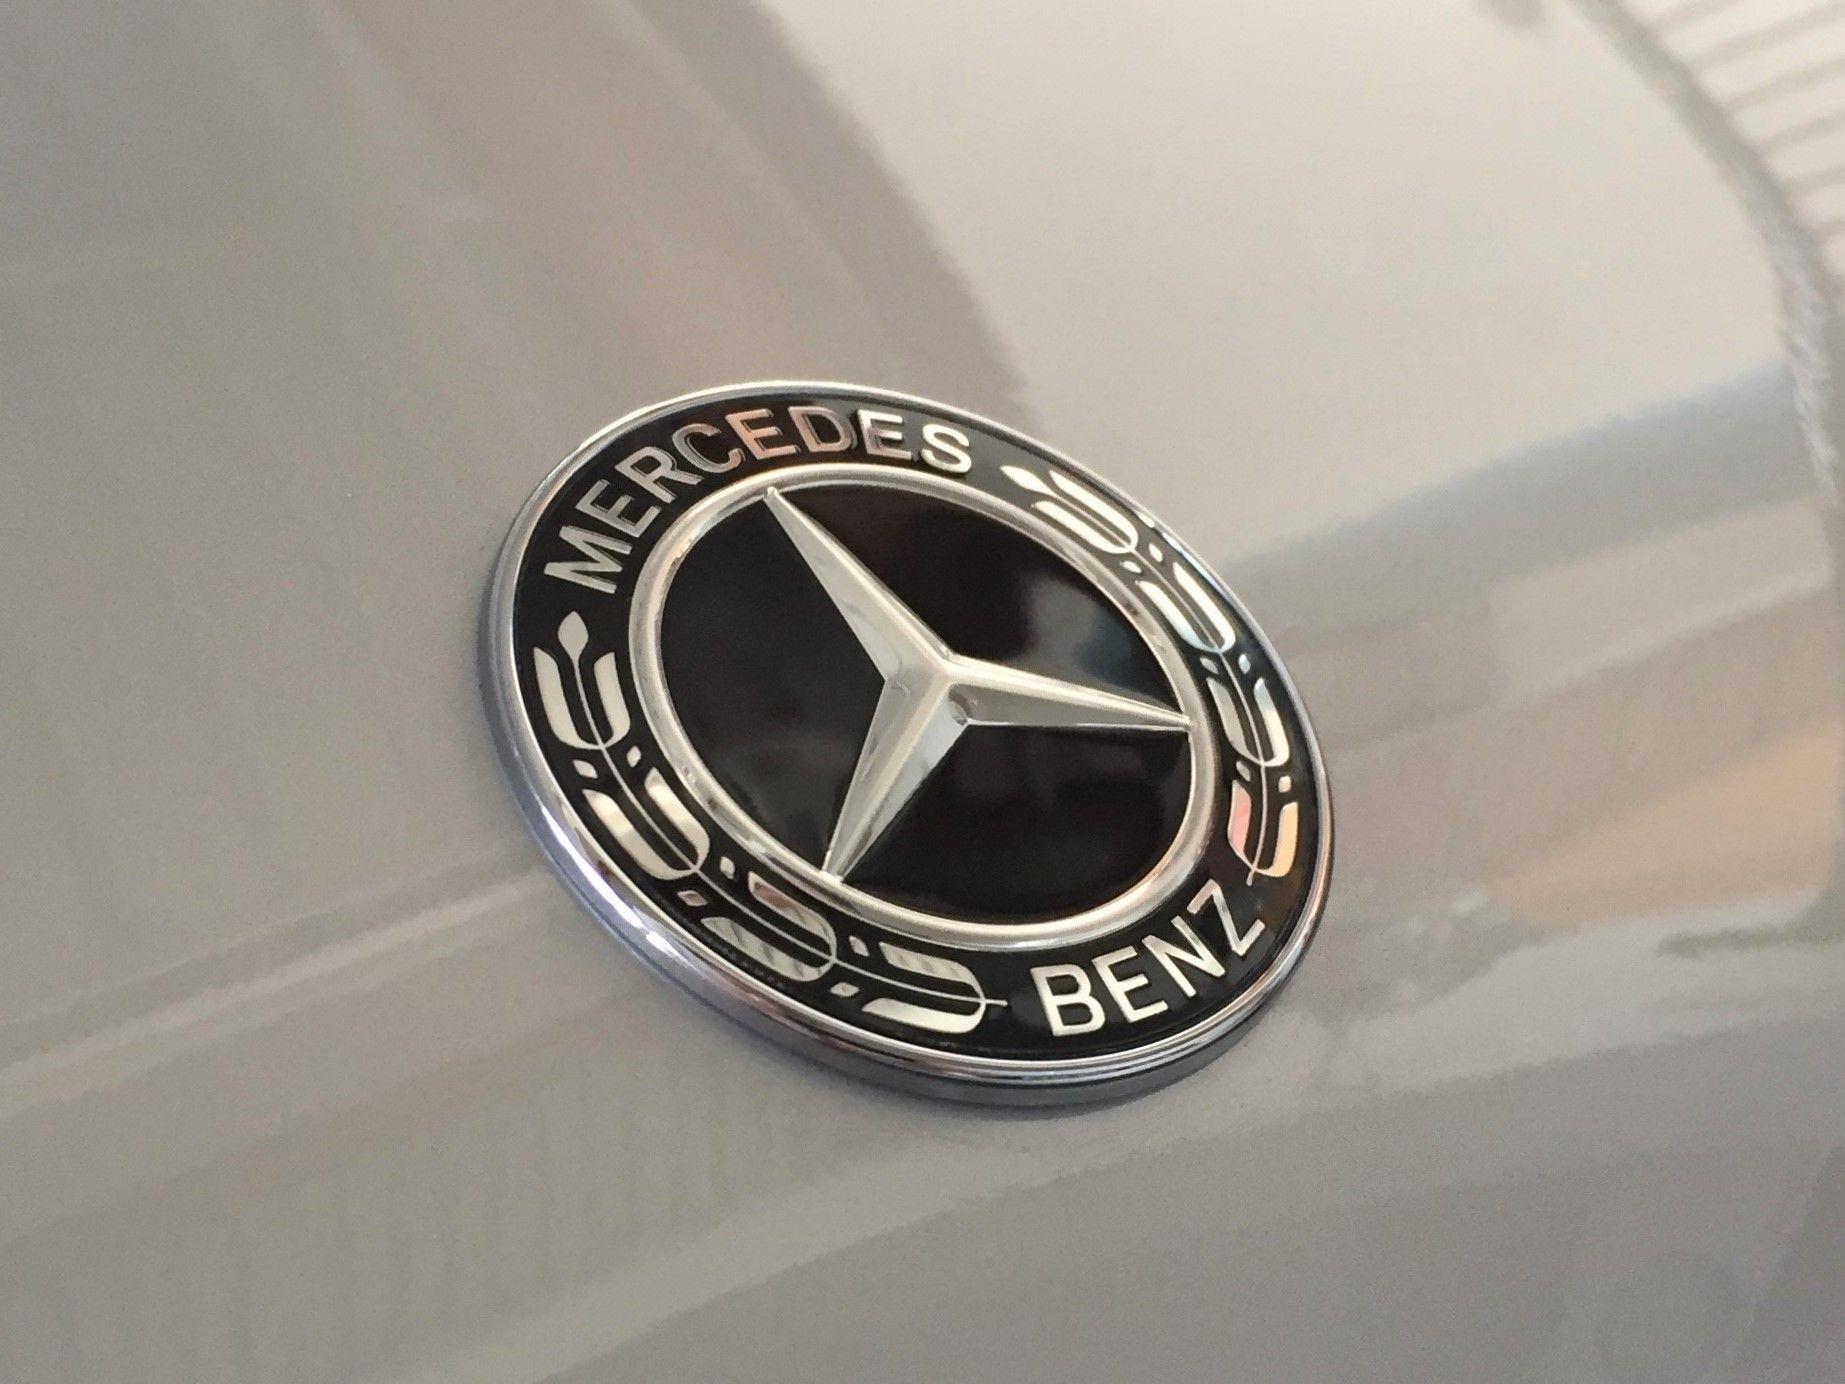 2018 Mercedes Logo - File:2018 Mercedes logo.jpg - Wikimedia Commons